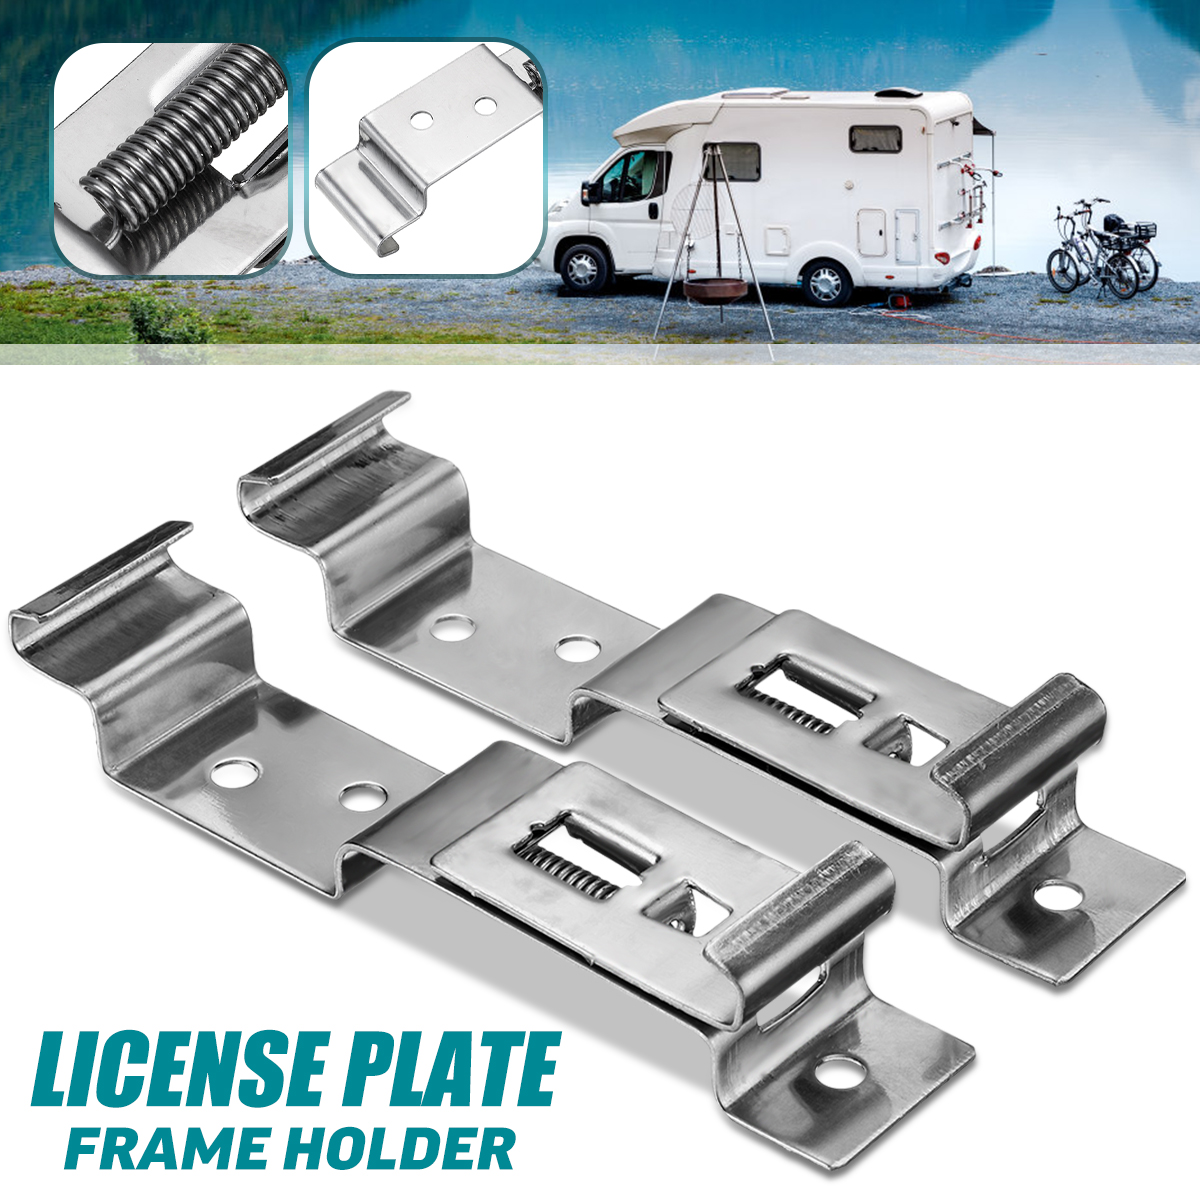 Stainless-Steel-Car-License-Plate-Frame-Holder-Trailer-Number-Plate-Clips-Spring-1620689